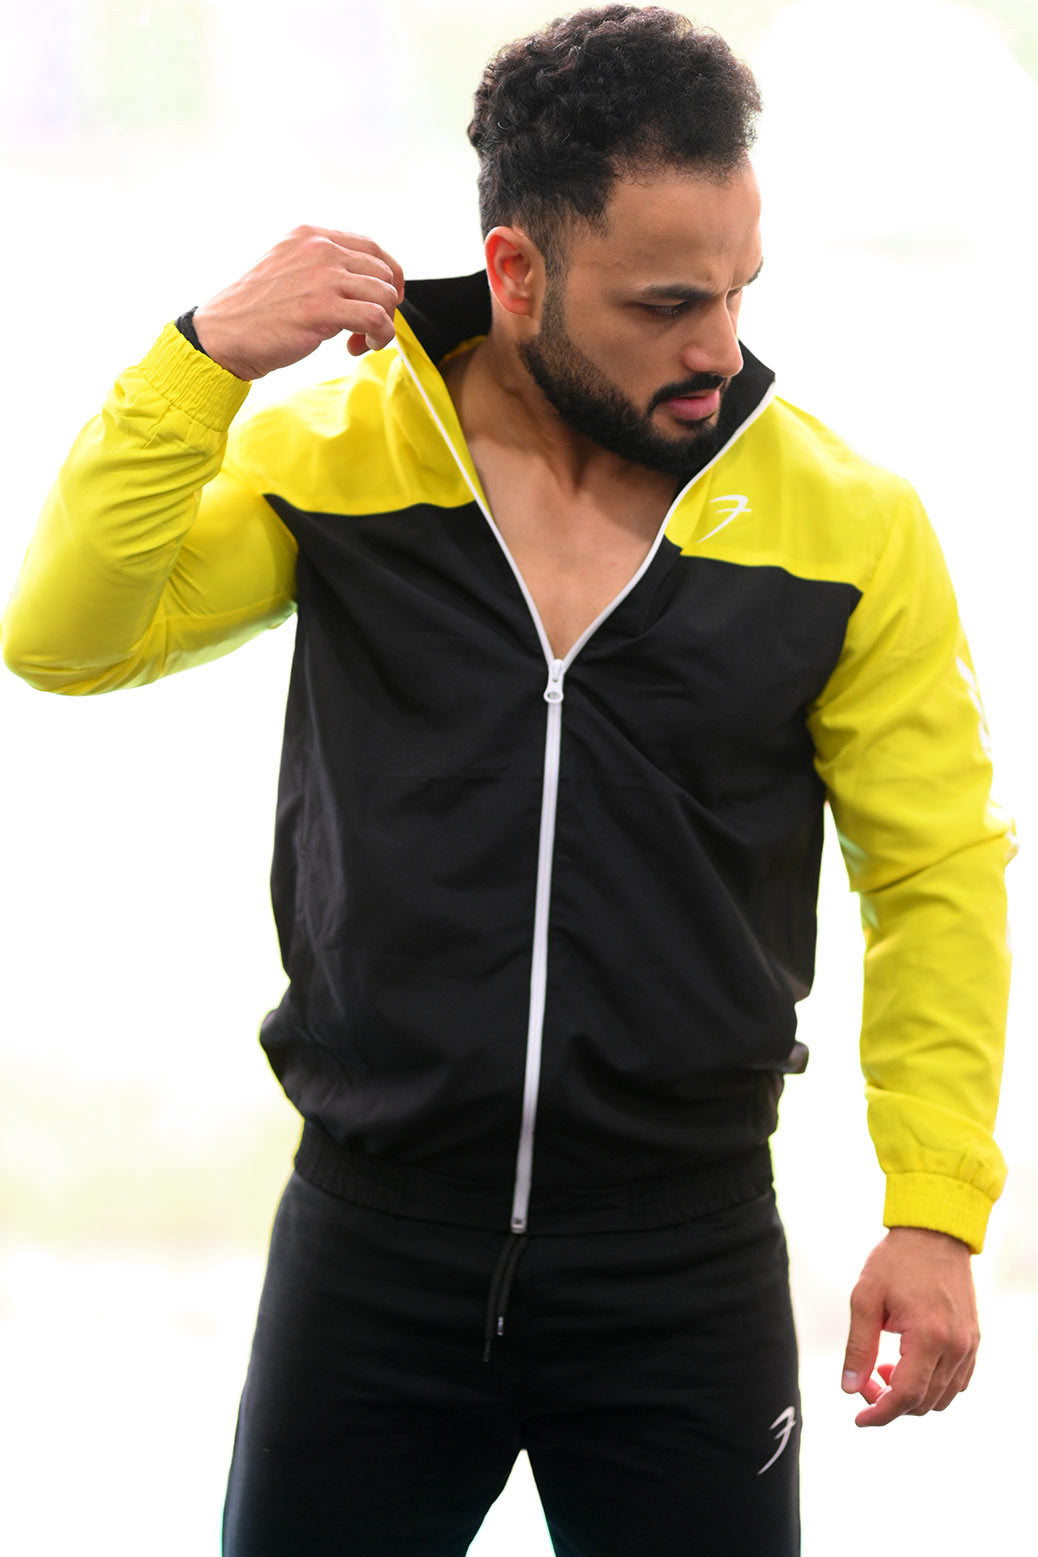 Trainer Jacket Neon Yellow